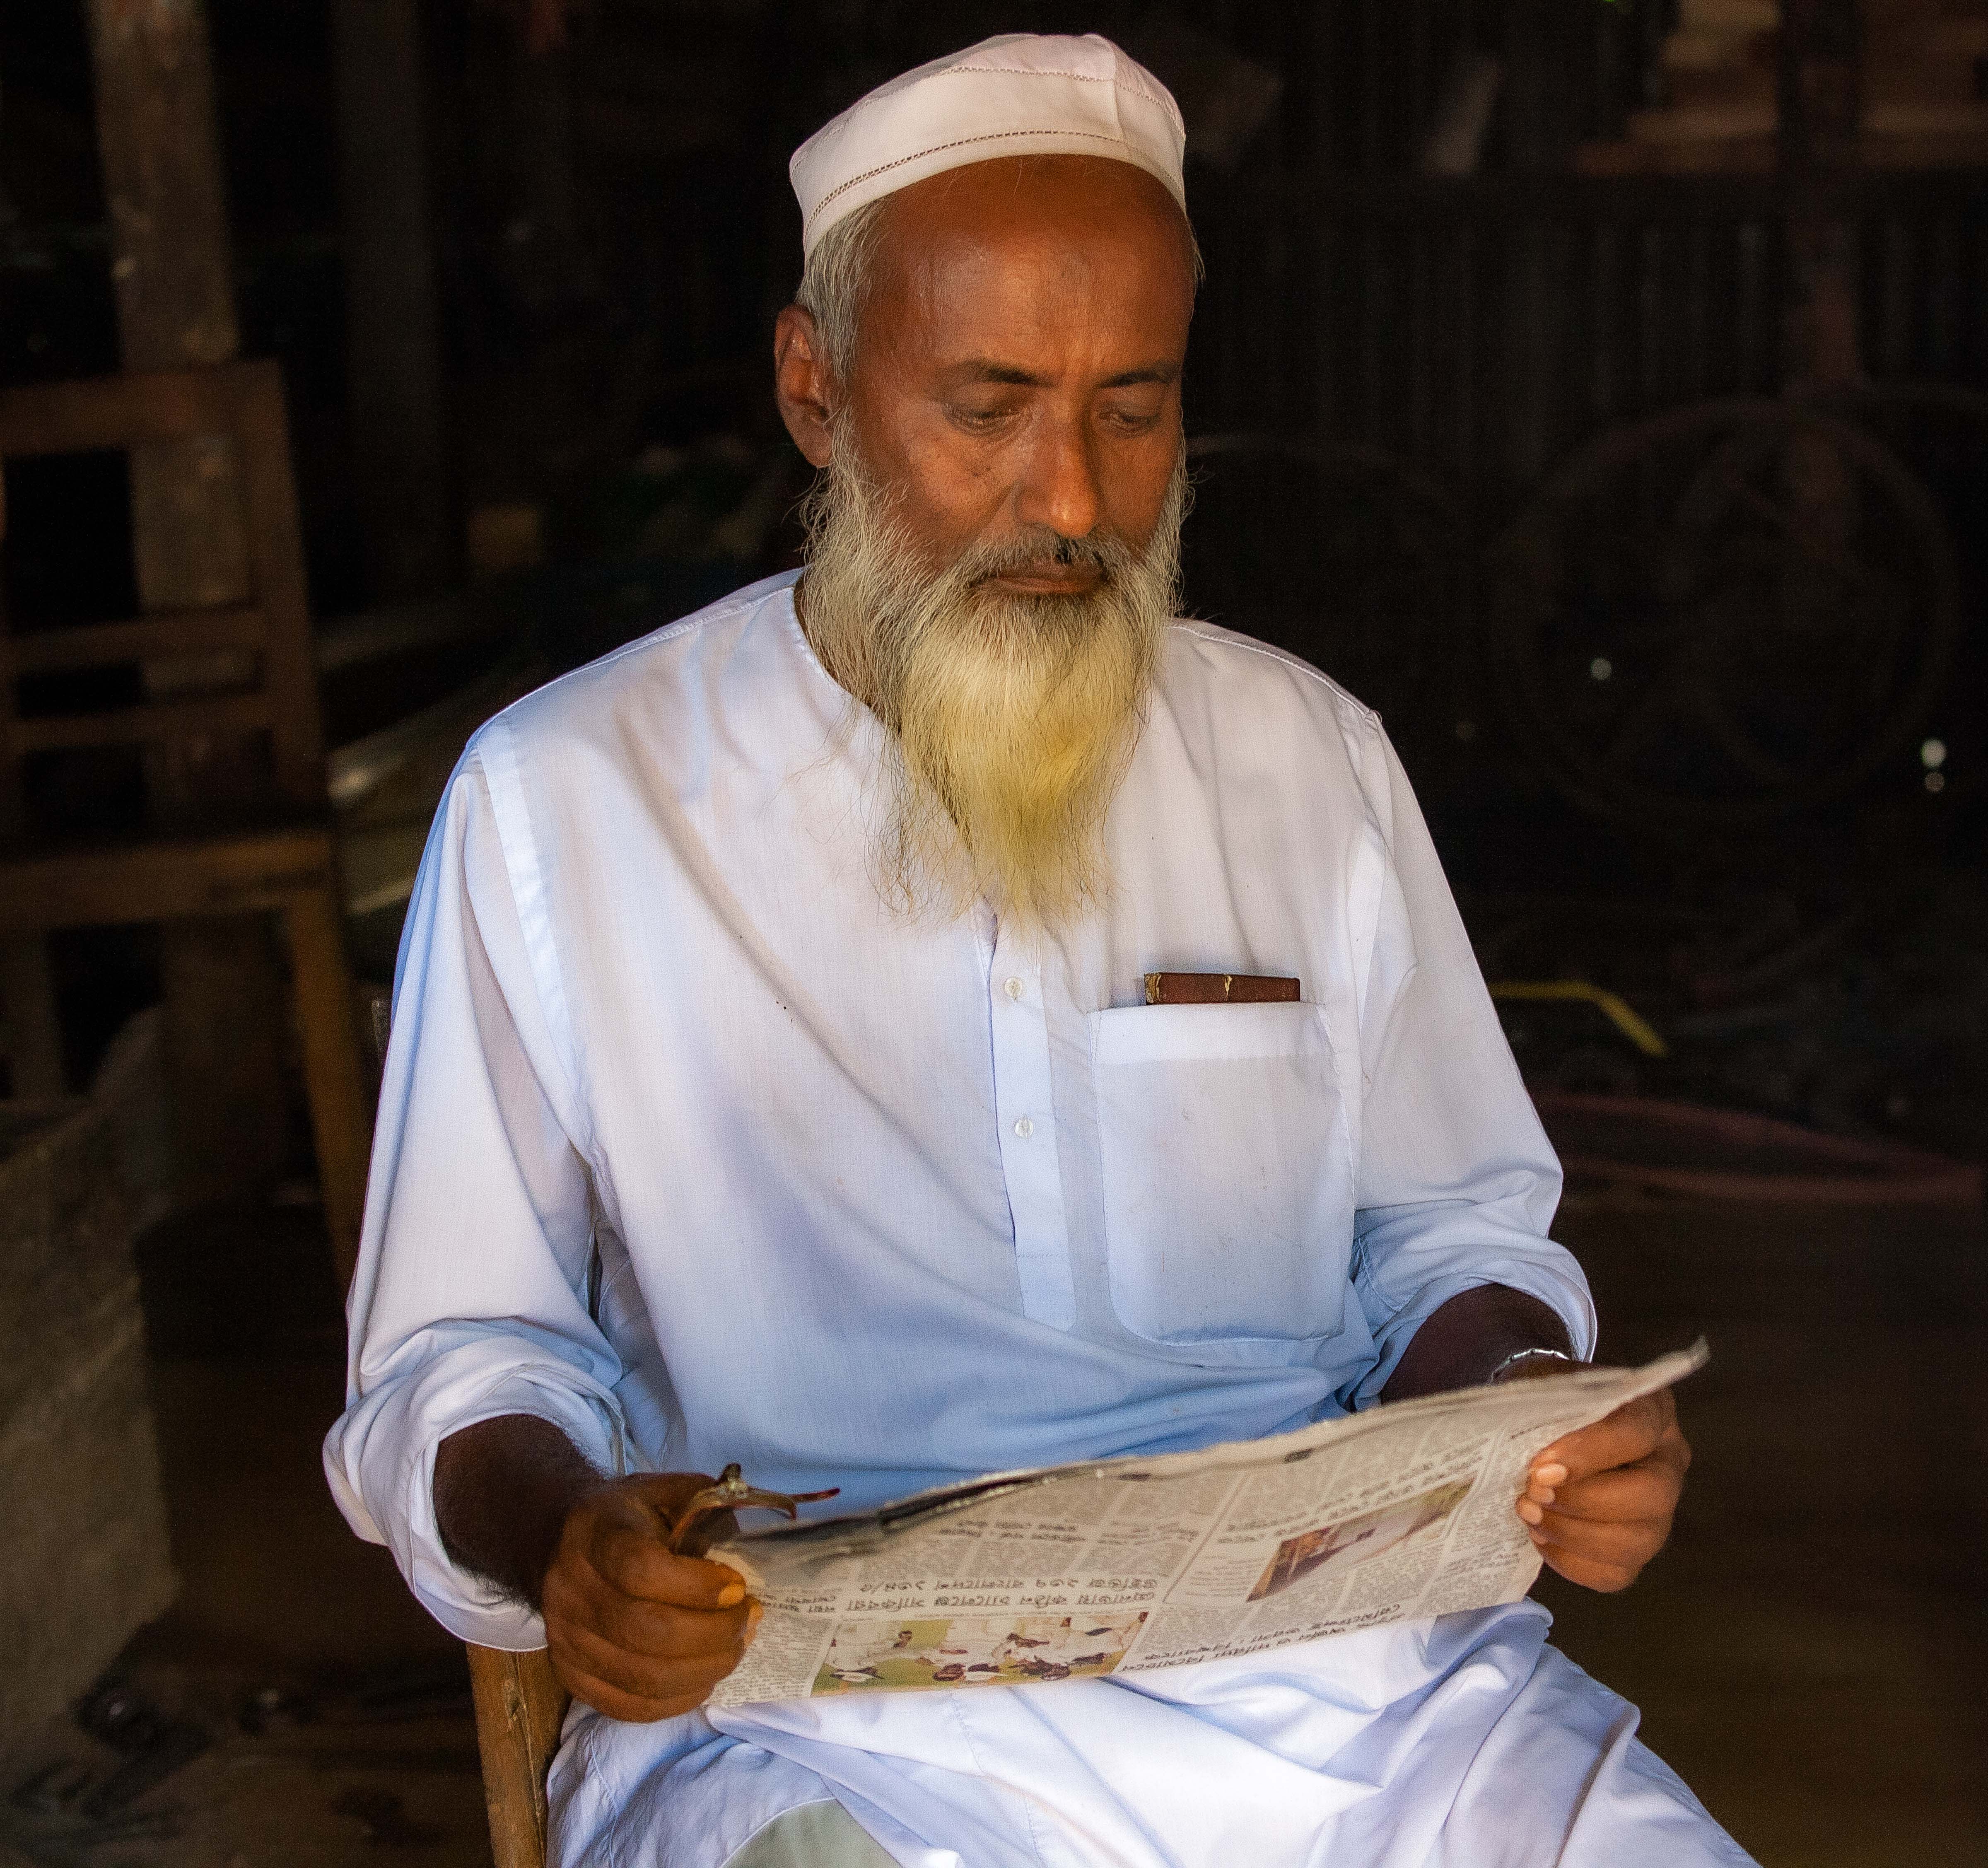 Bangladesh, Netrakona Prov, Reader, 2009, IMG 8764